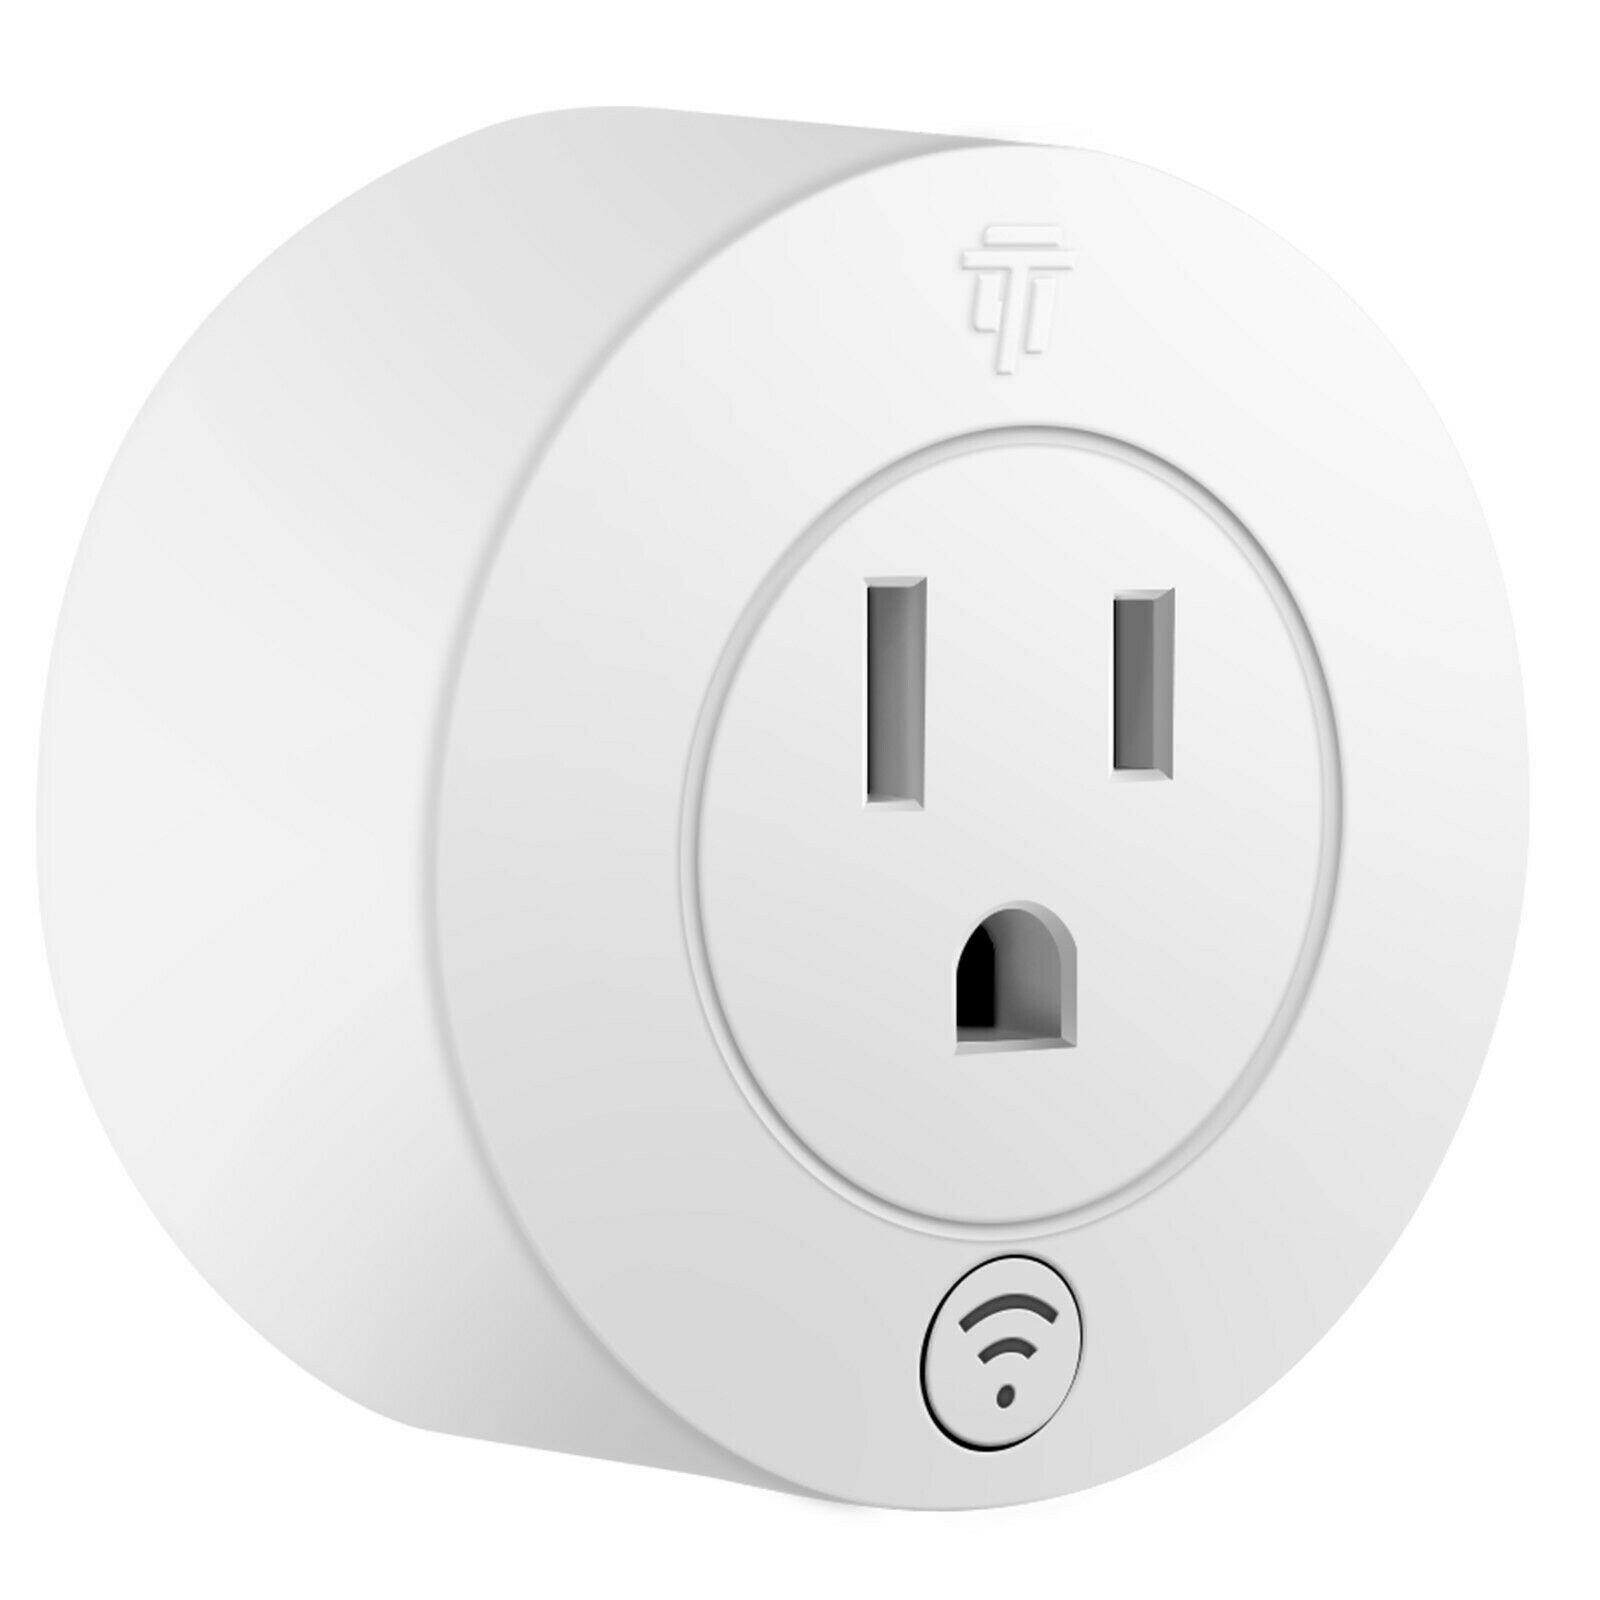 Topgreener Smart Mini Wi-fi Plug W/ Energy Monitoring Works With Alexa / Google